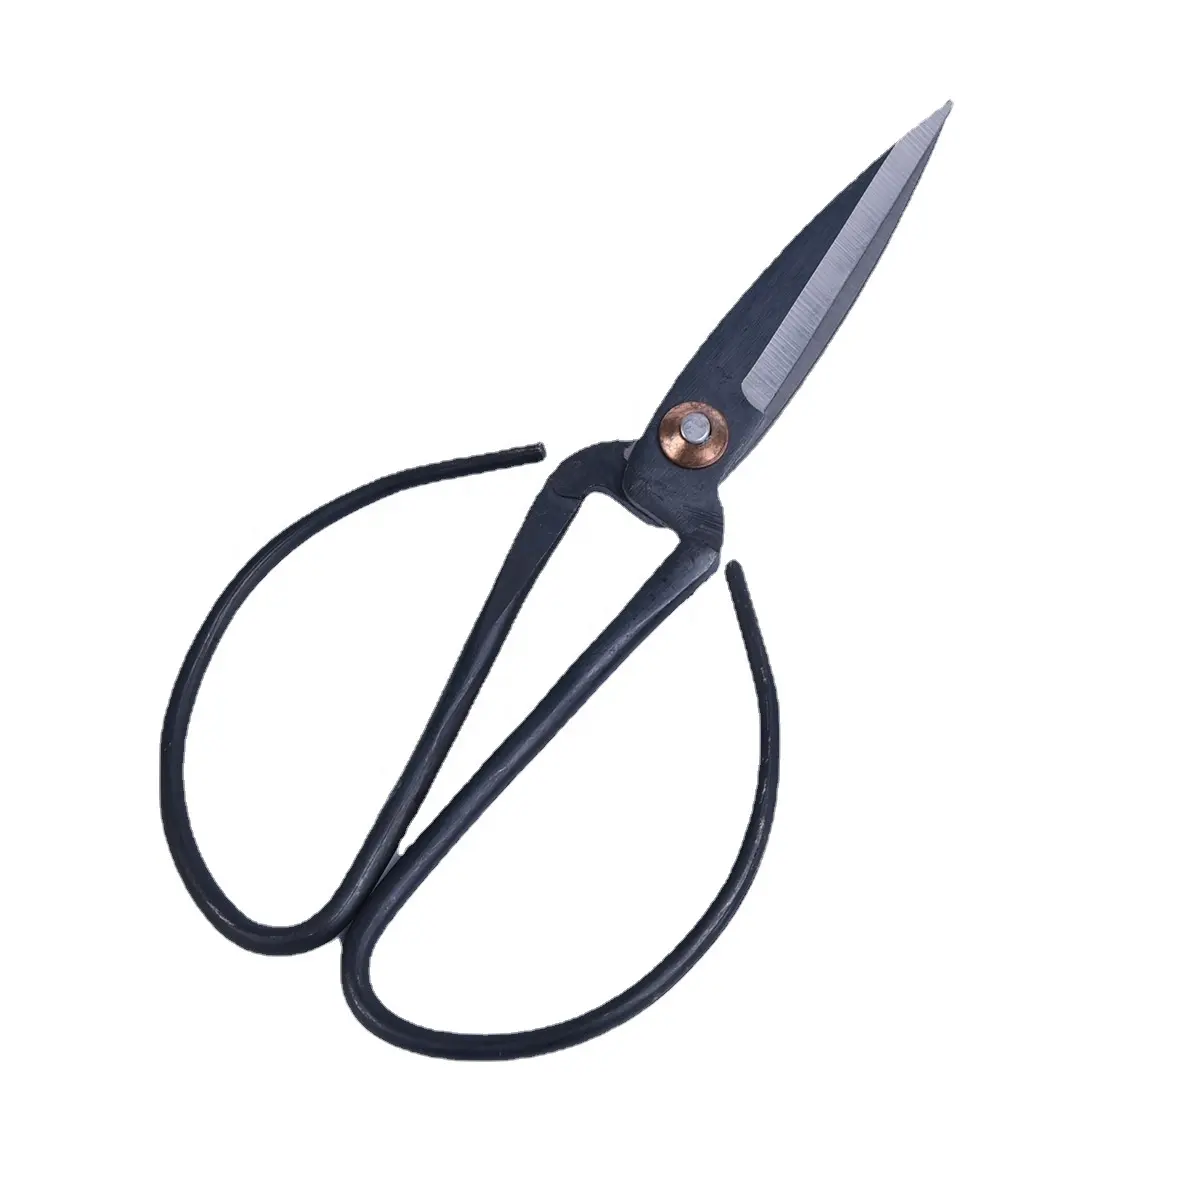 Civil household scissors small kitchen scissors old-fashioned scissors